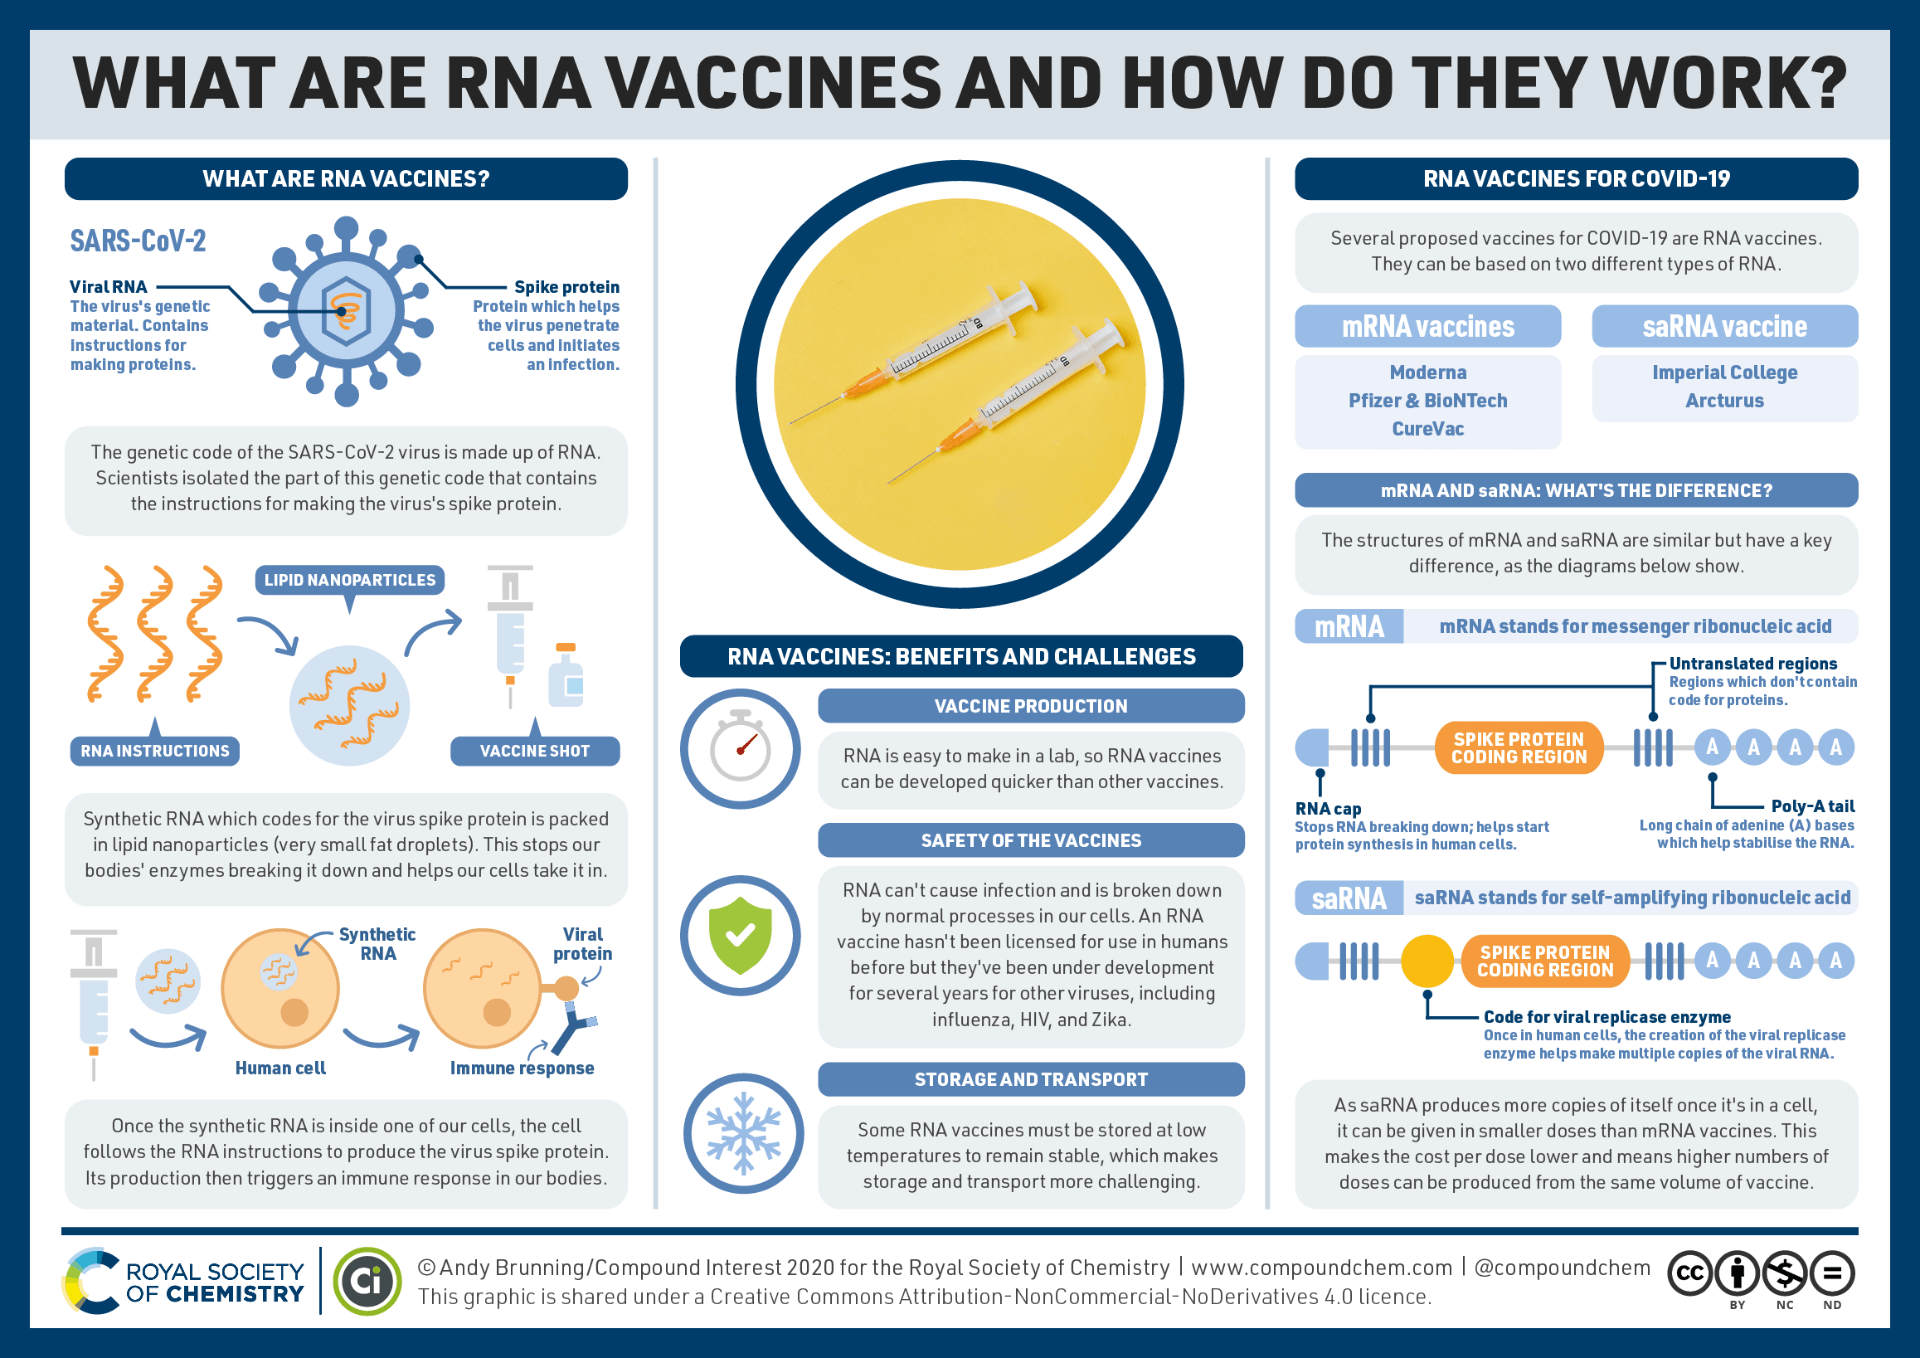 An infographic describing how RNA vaccines work